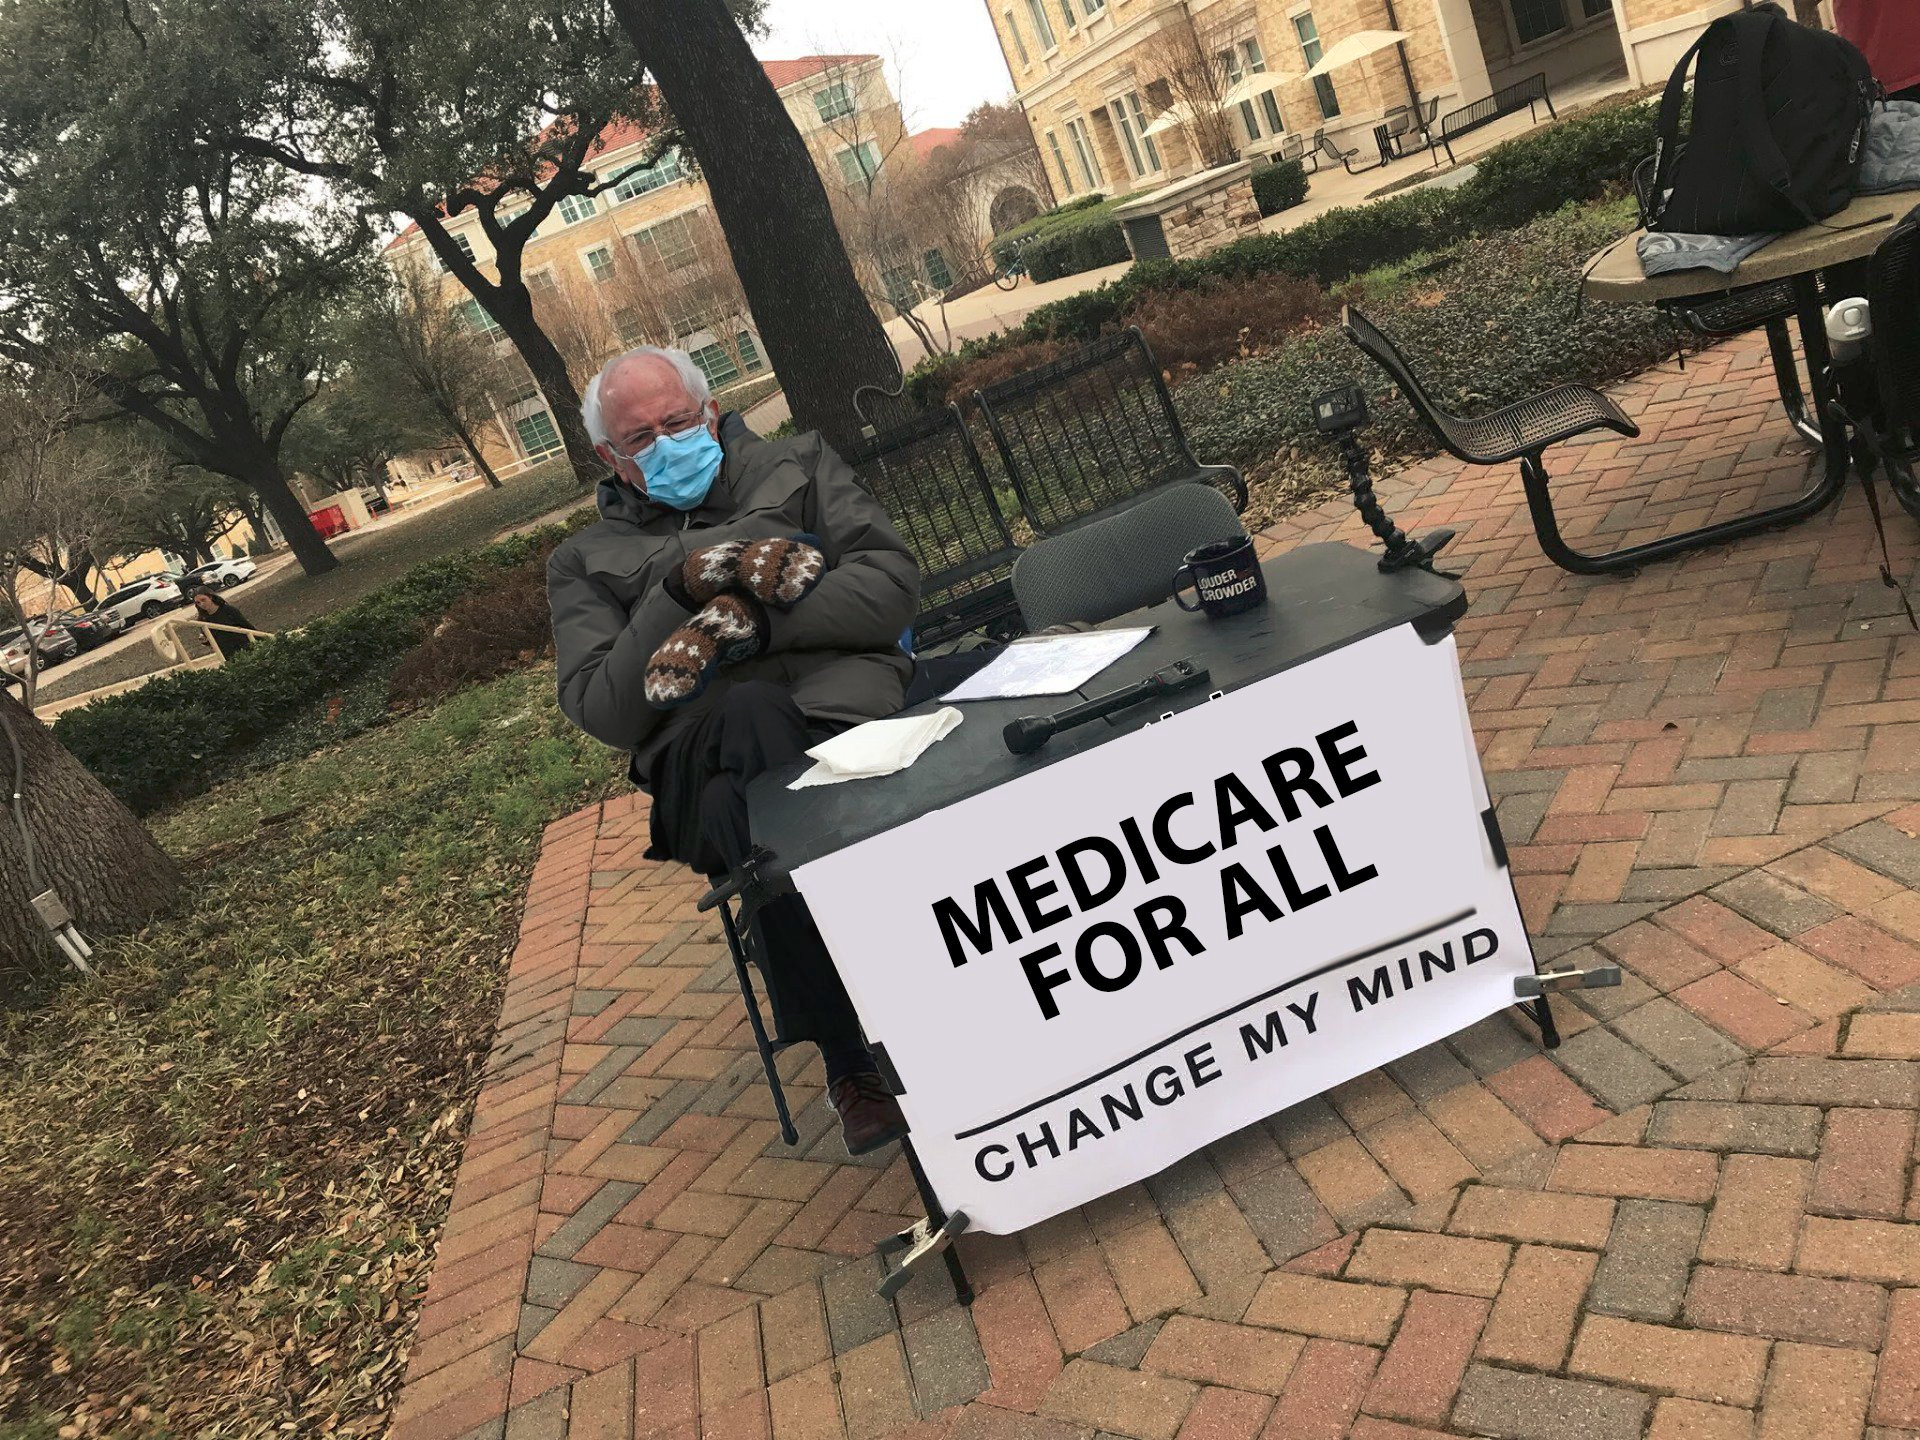 Bernie Change My mind Blank Meme Template